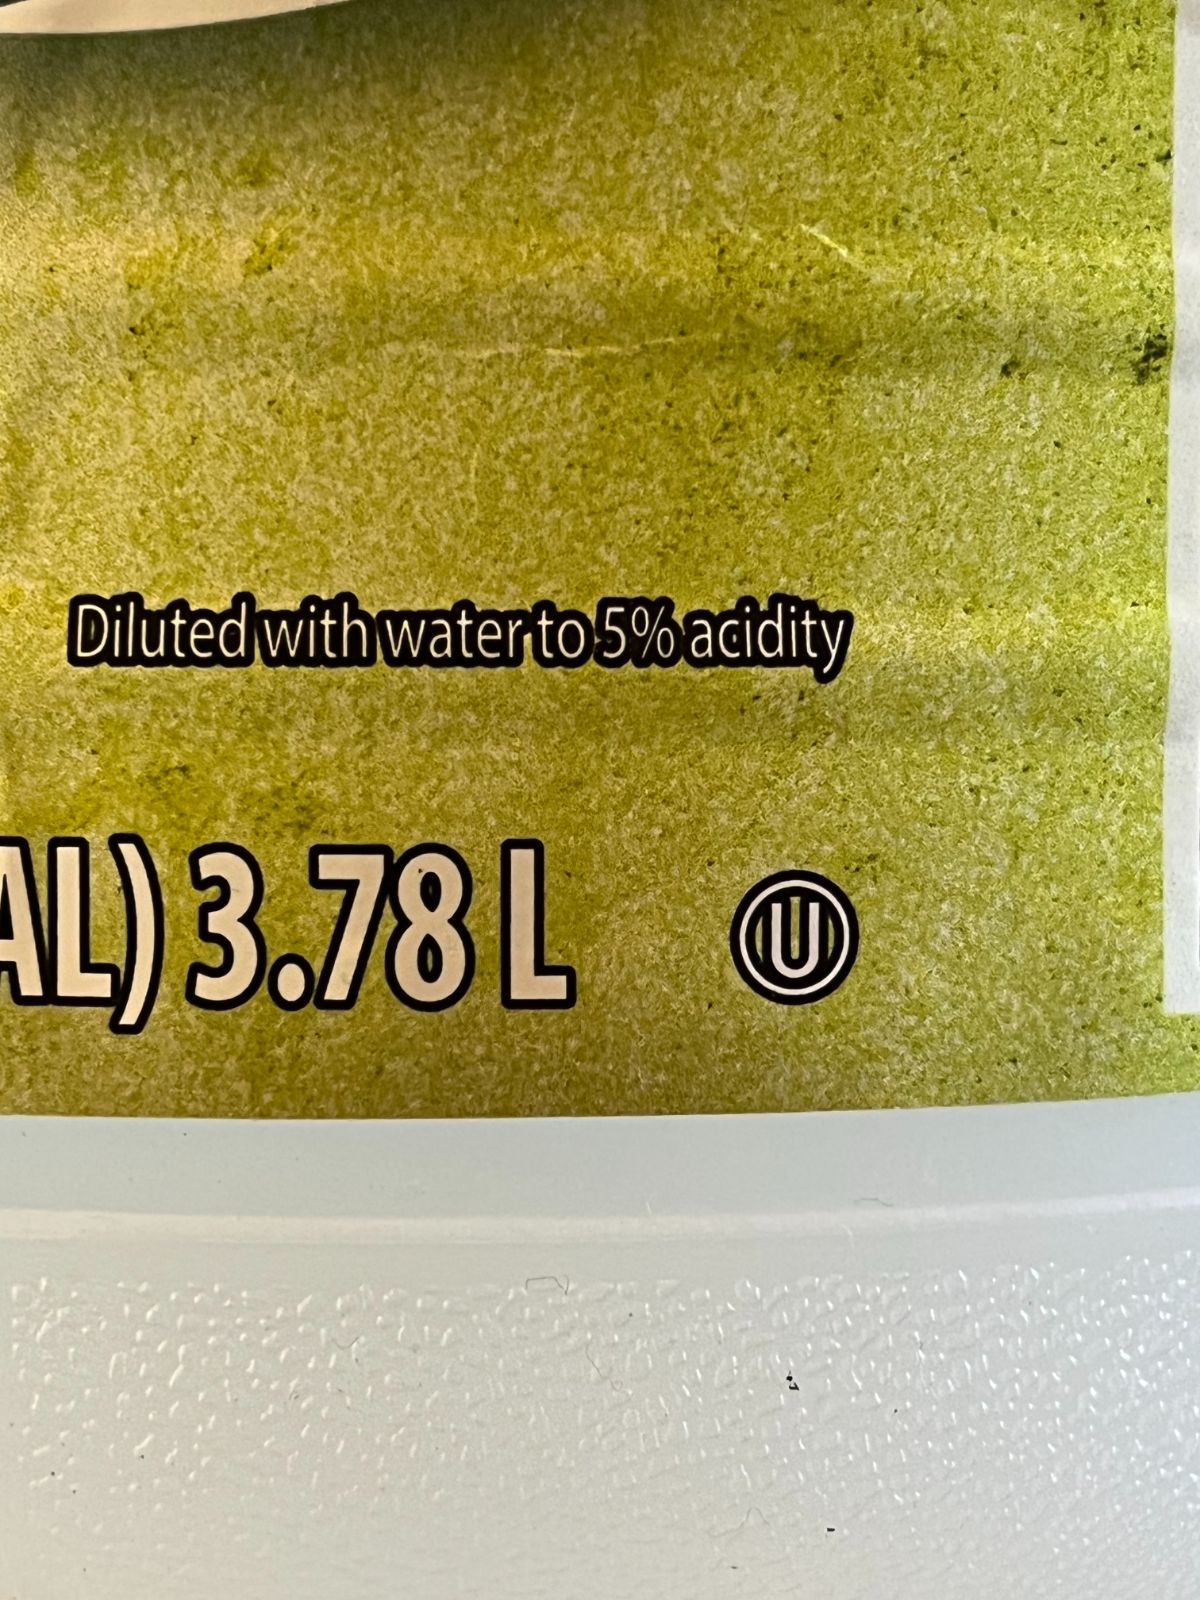 A vinegar bottle marked as 5% acidity